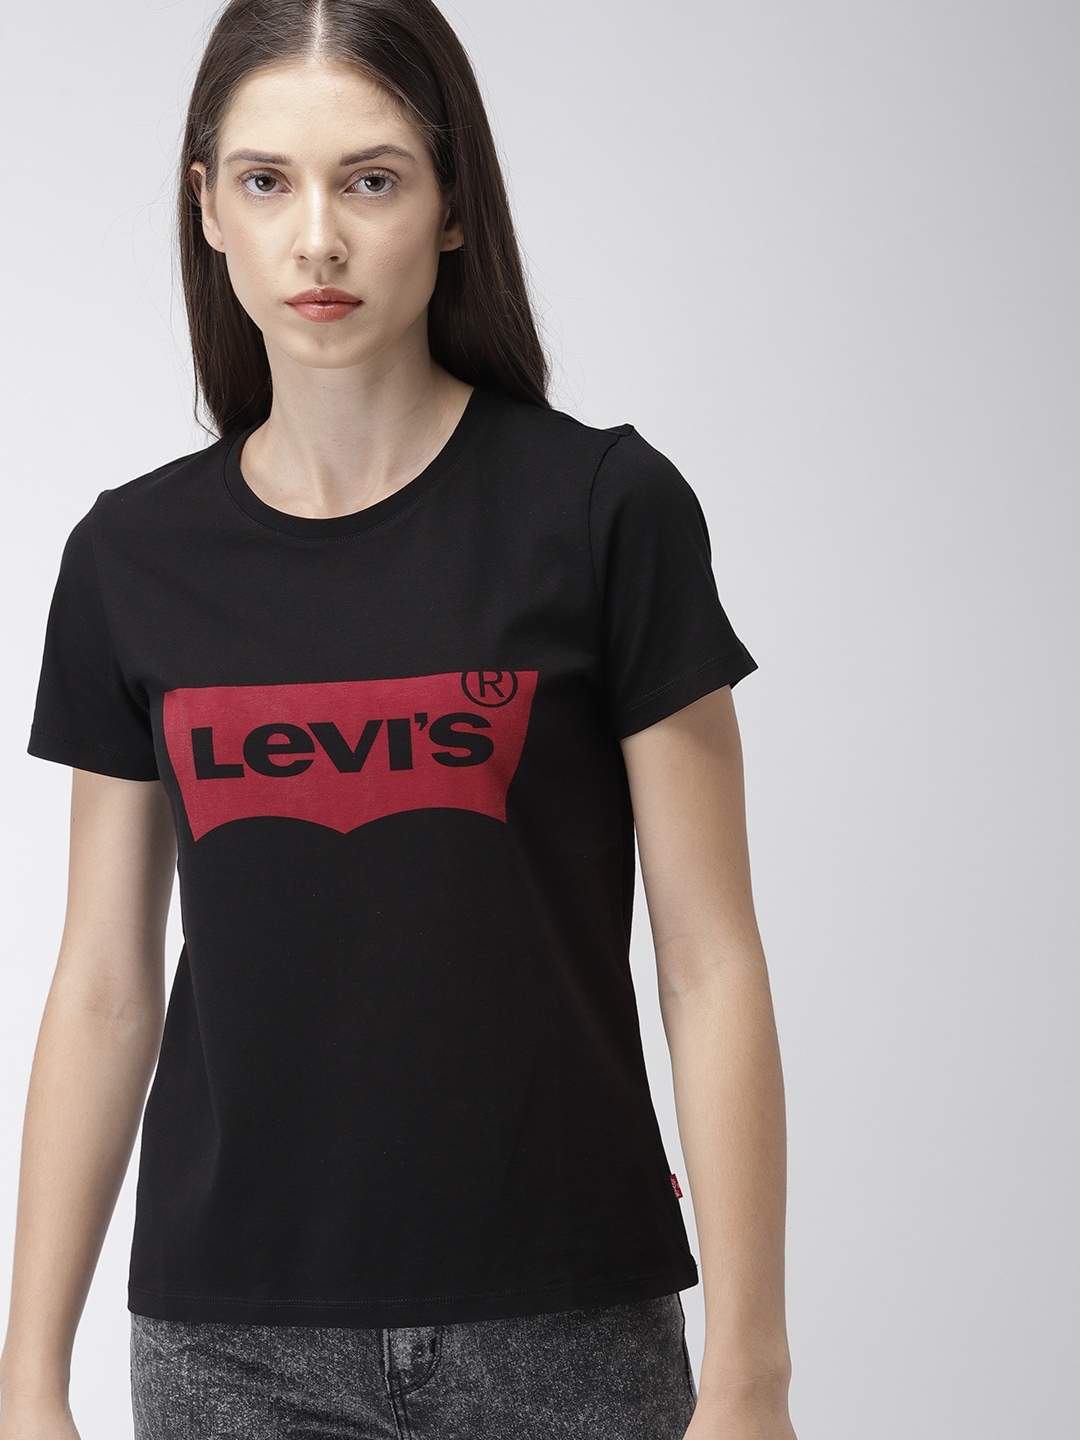 levis black t shirt womens